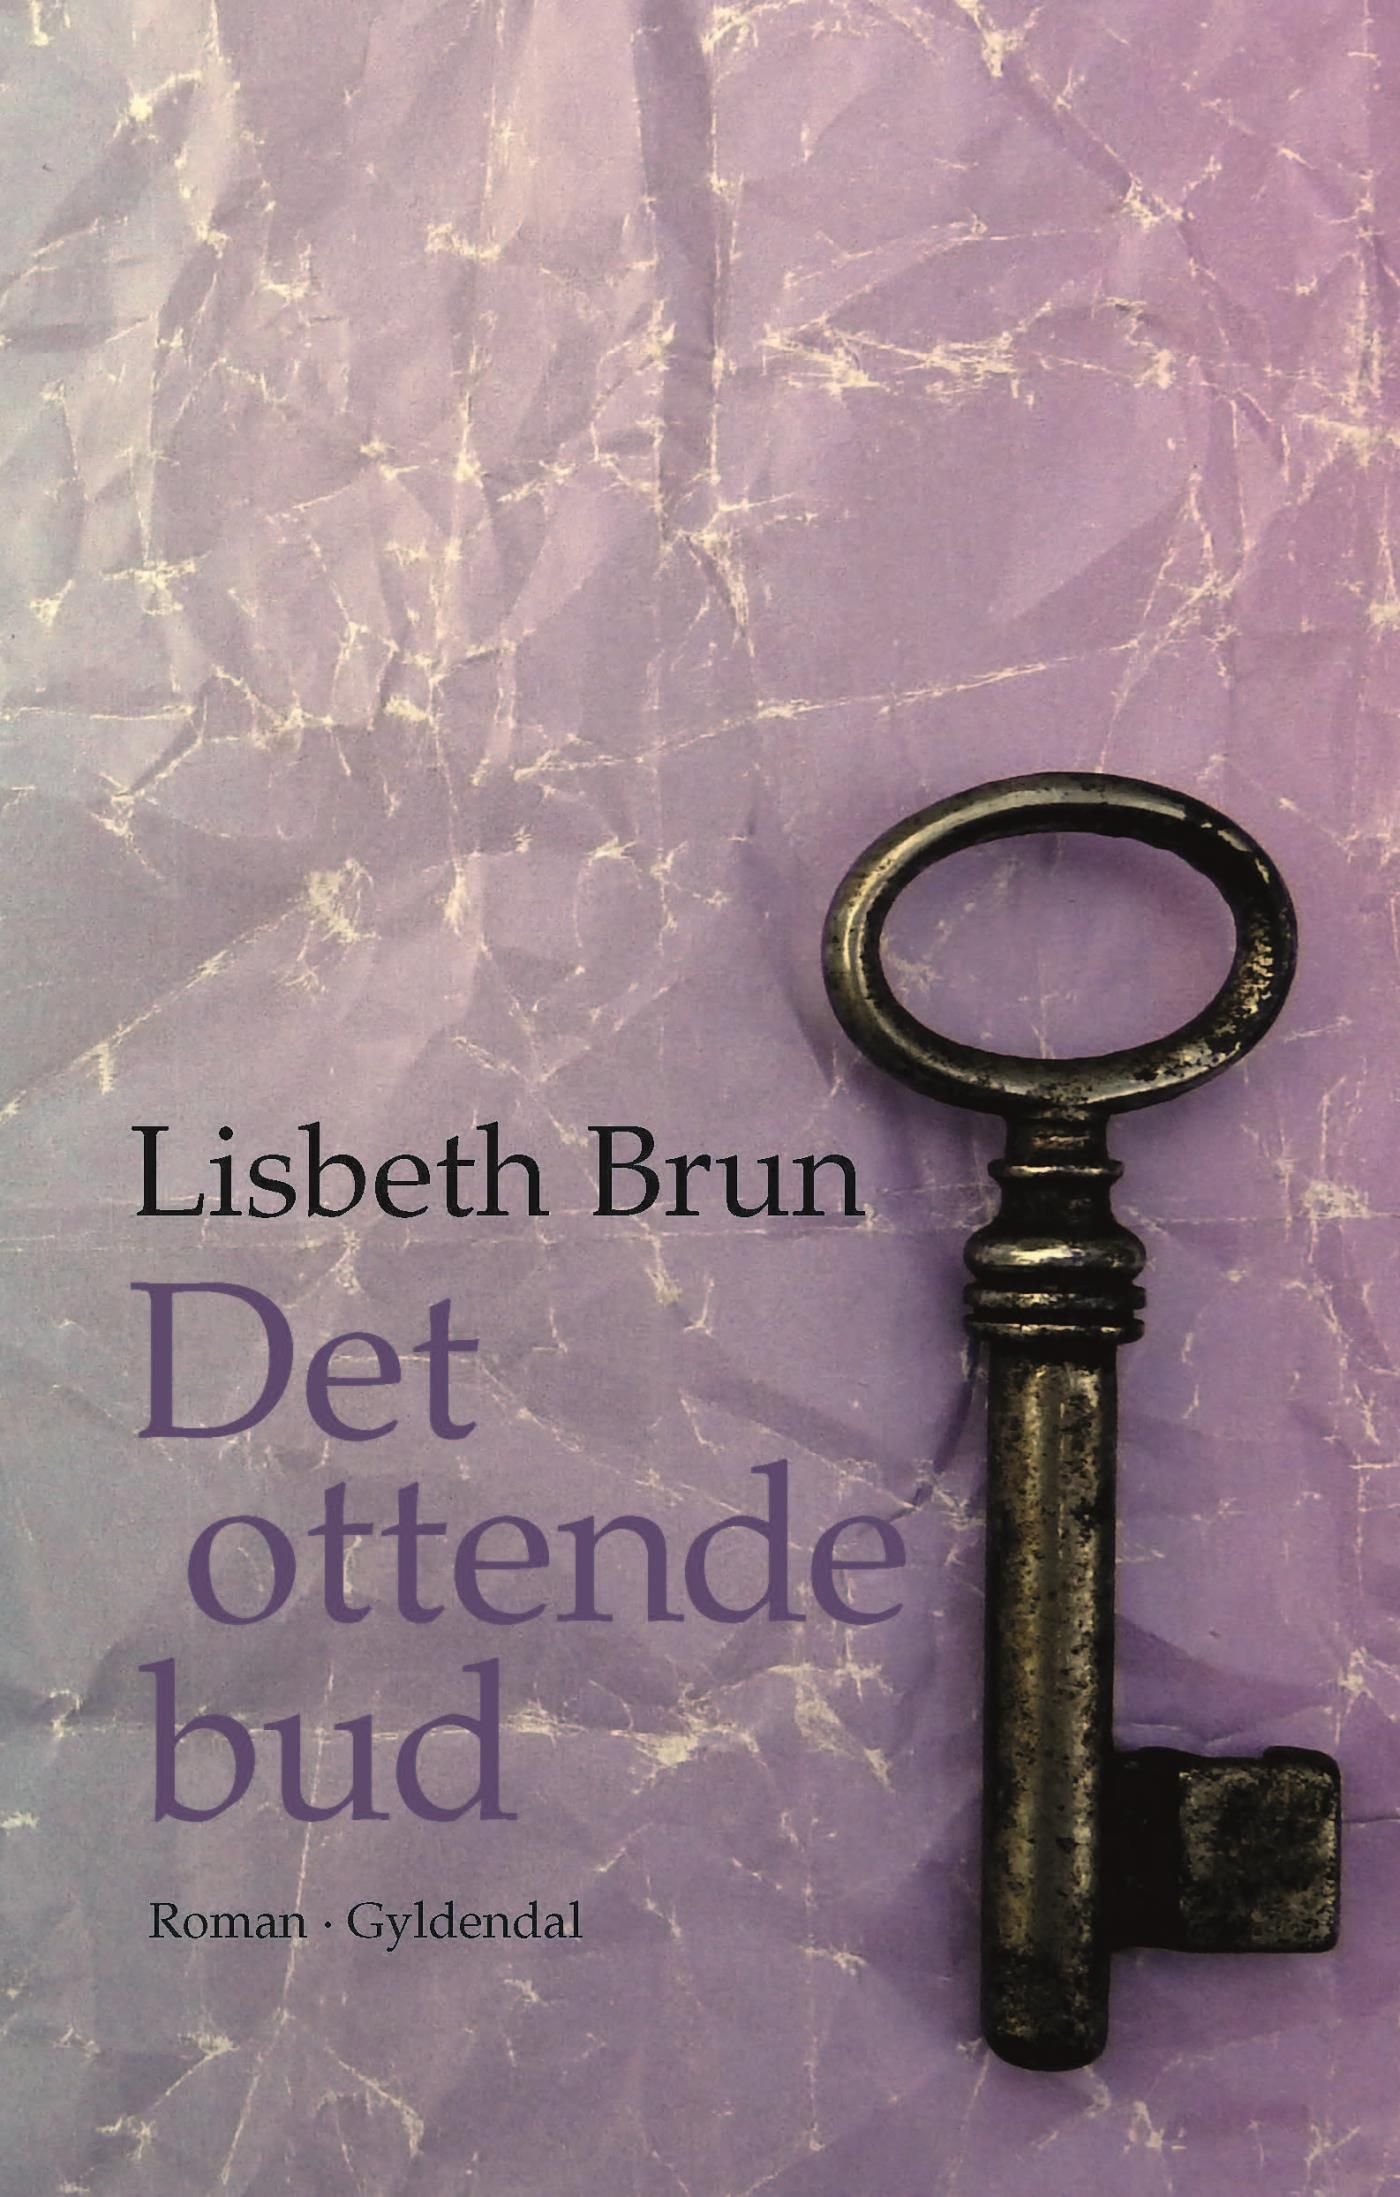 Det ottende bud, eBook by Lisbeth Brun